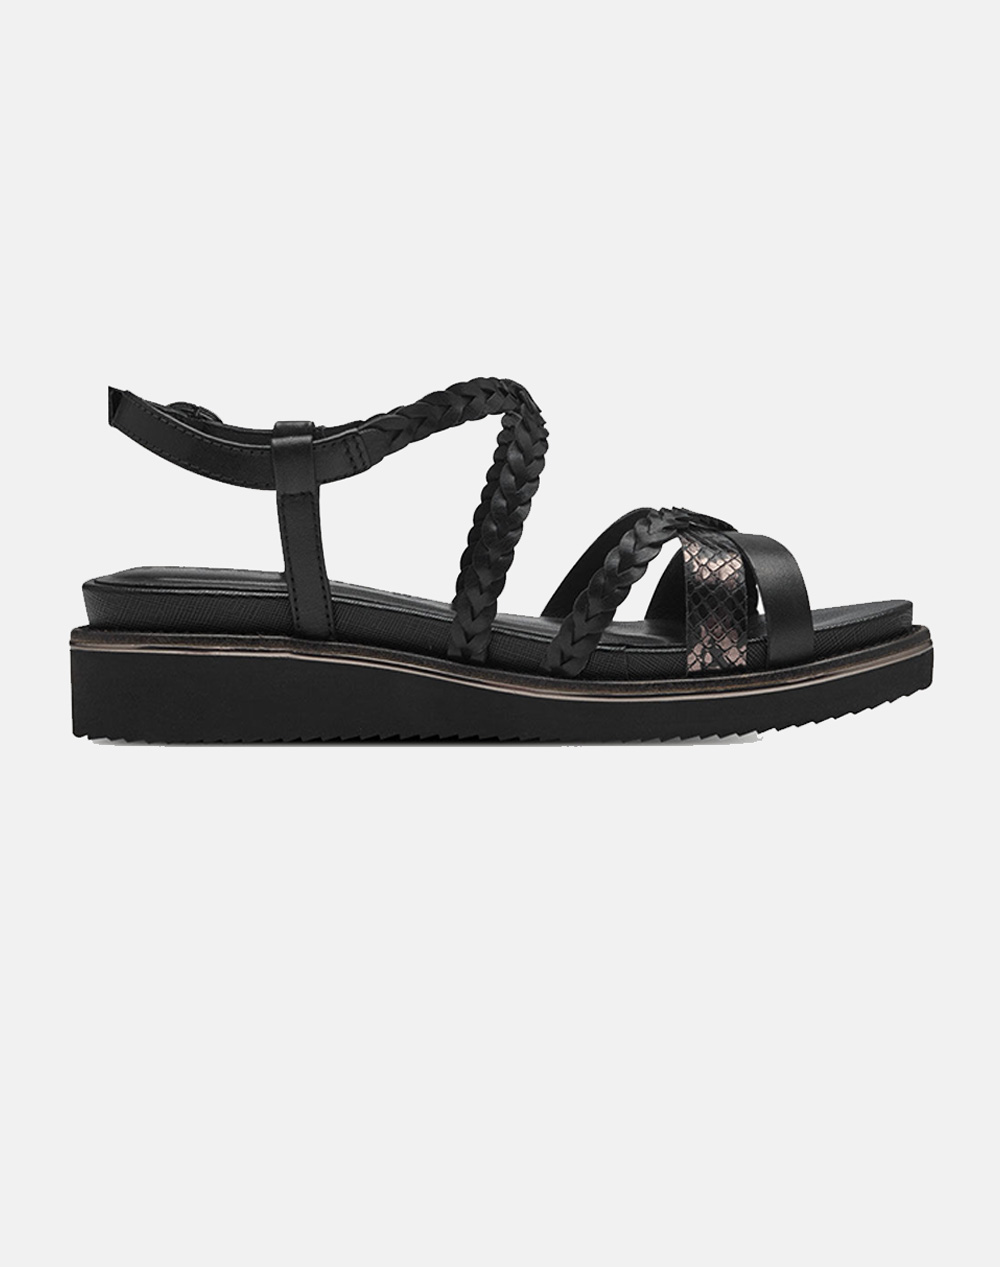 TAMARIS Sling Sandals 1-28207-42-001 Black